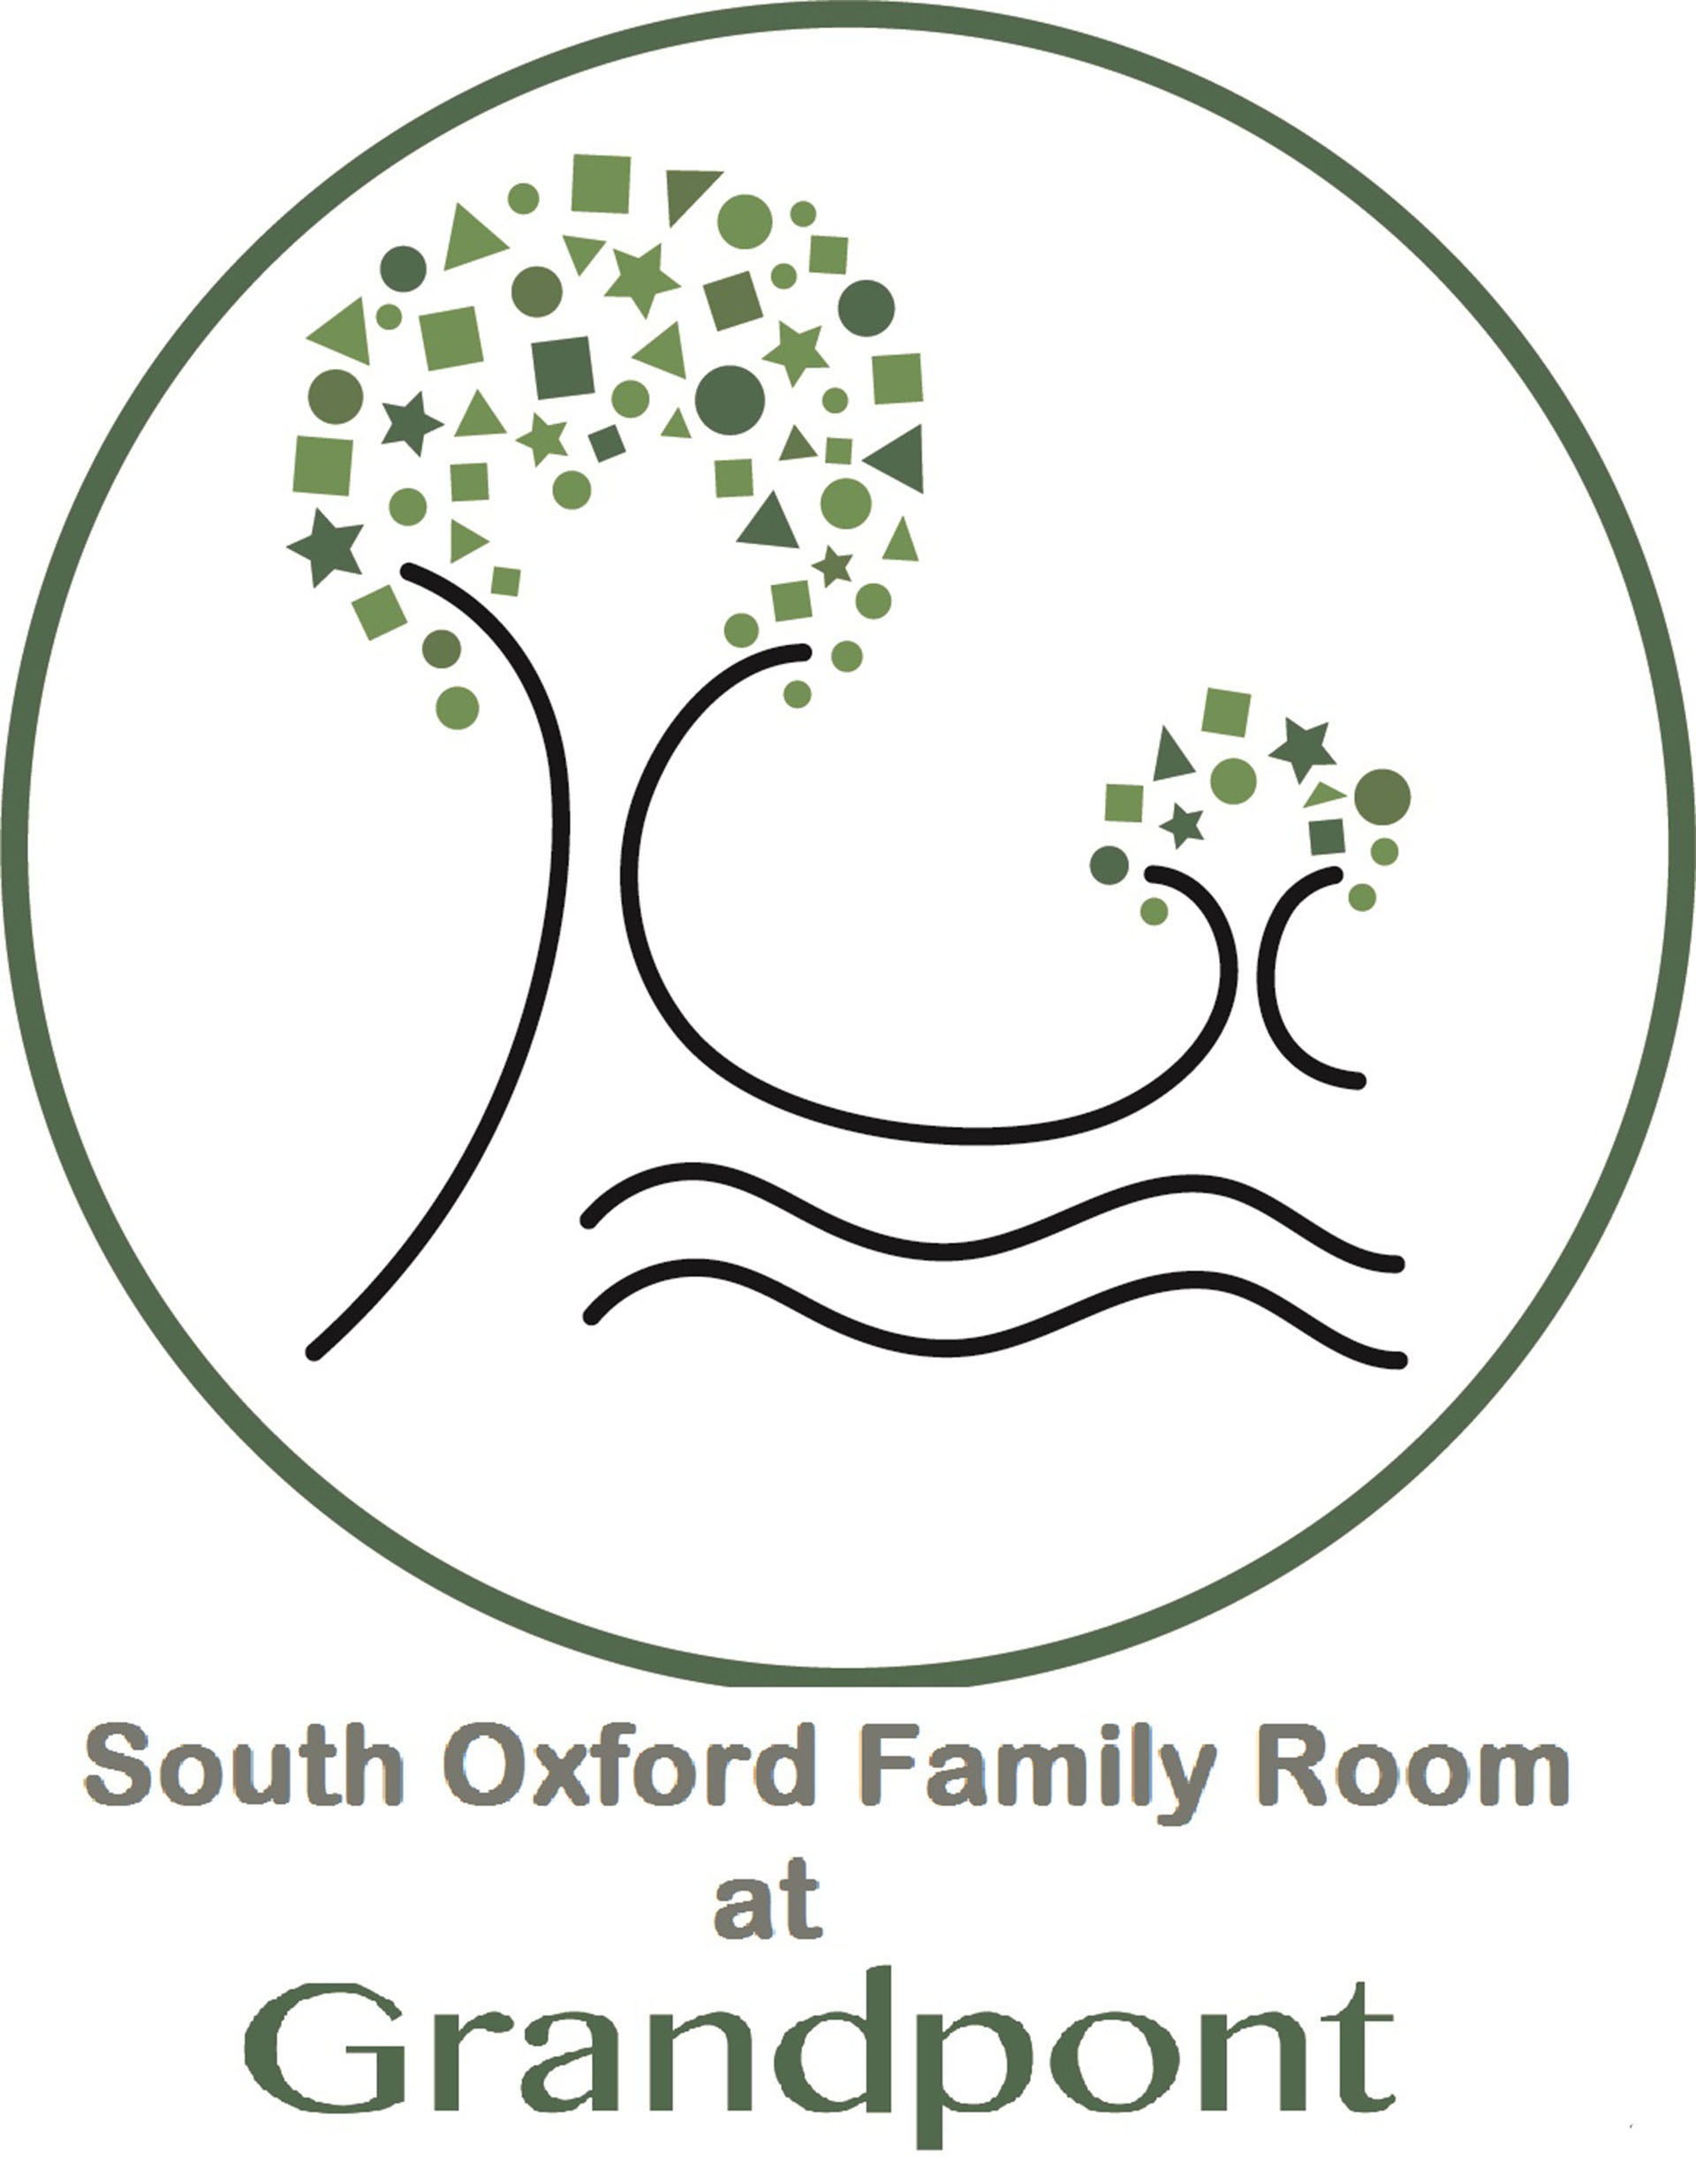 South Oxford Family Room's logo